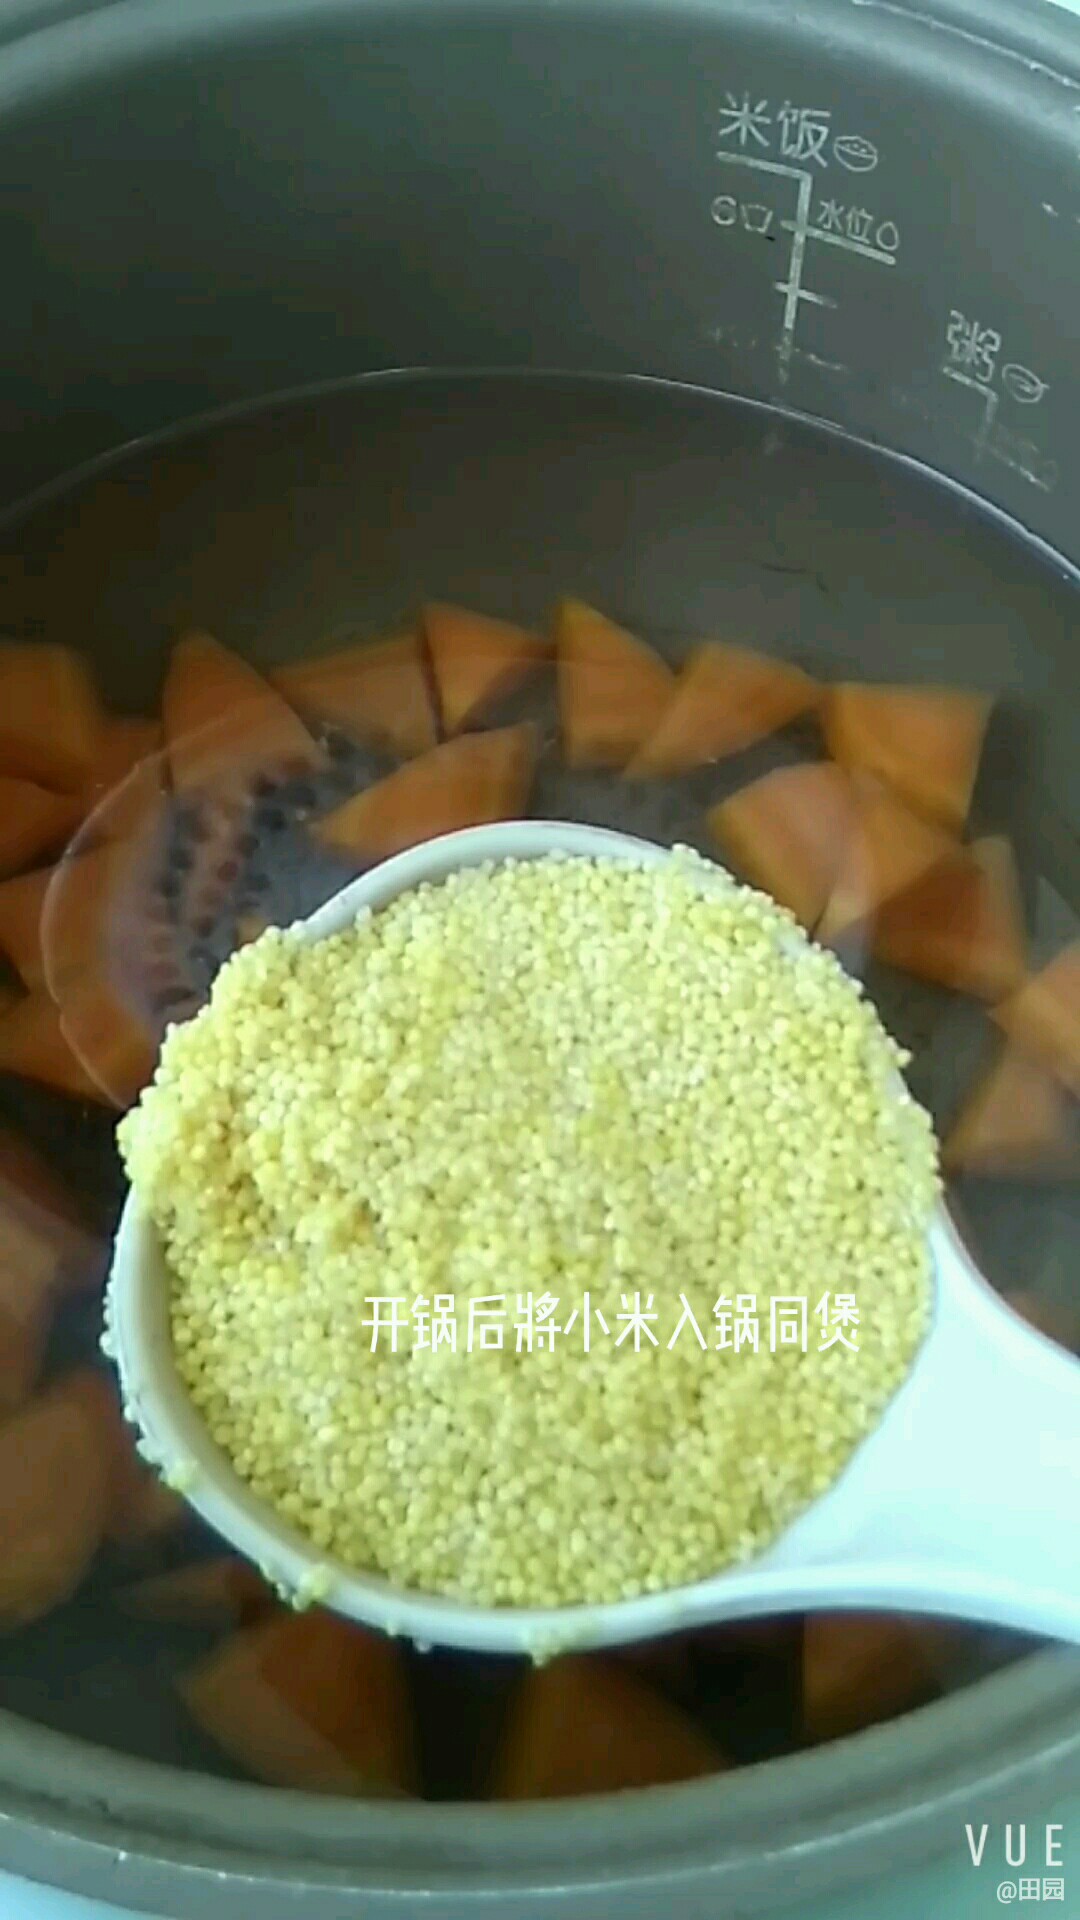 Carrot and Black Wolfberry Porridge recipe